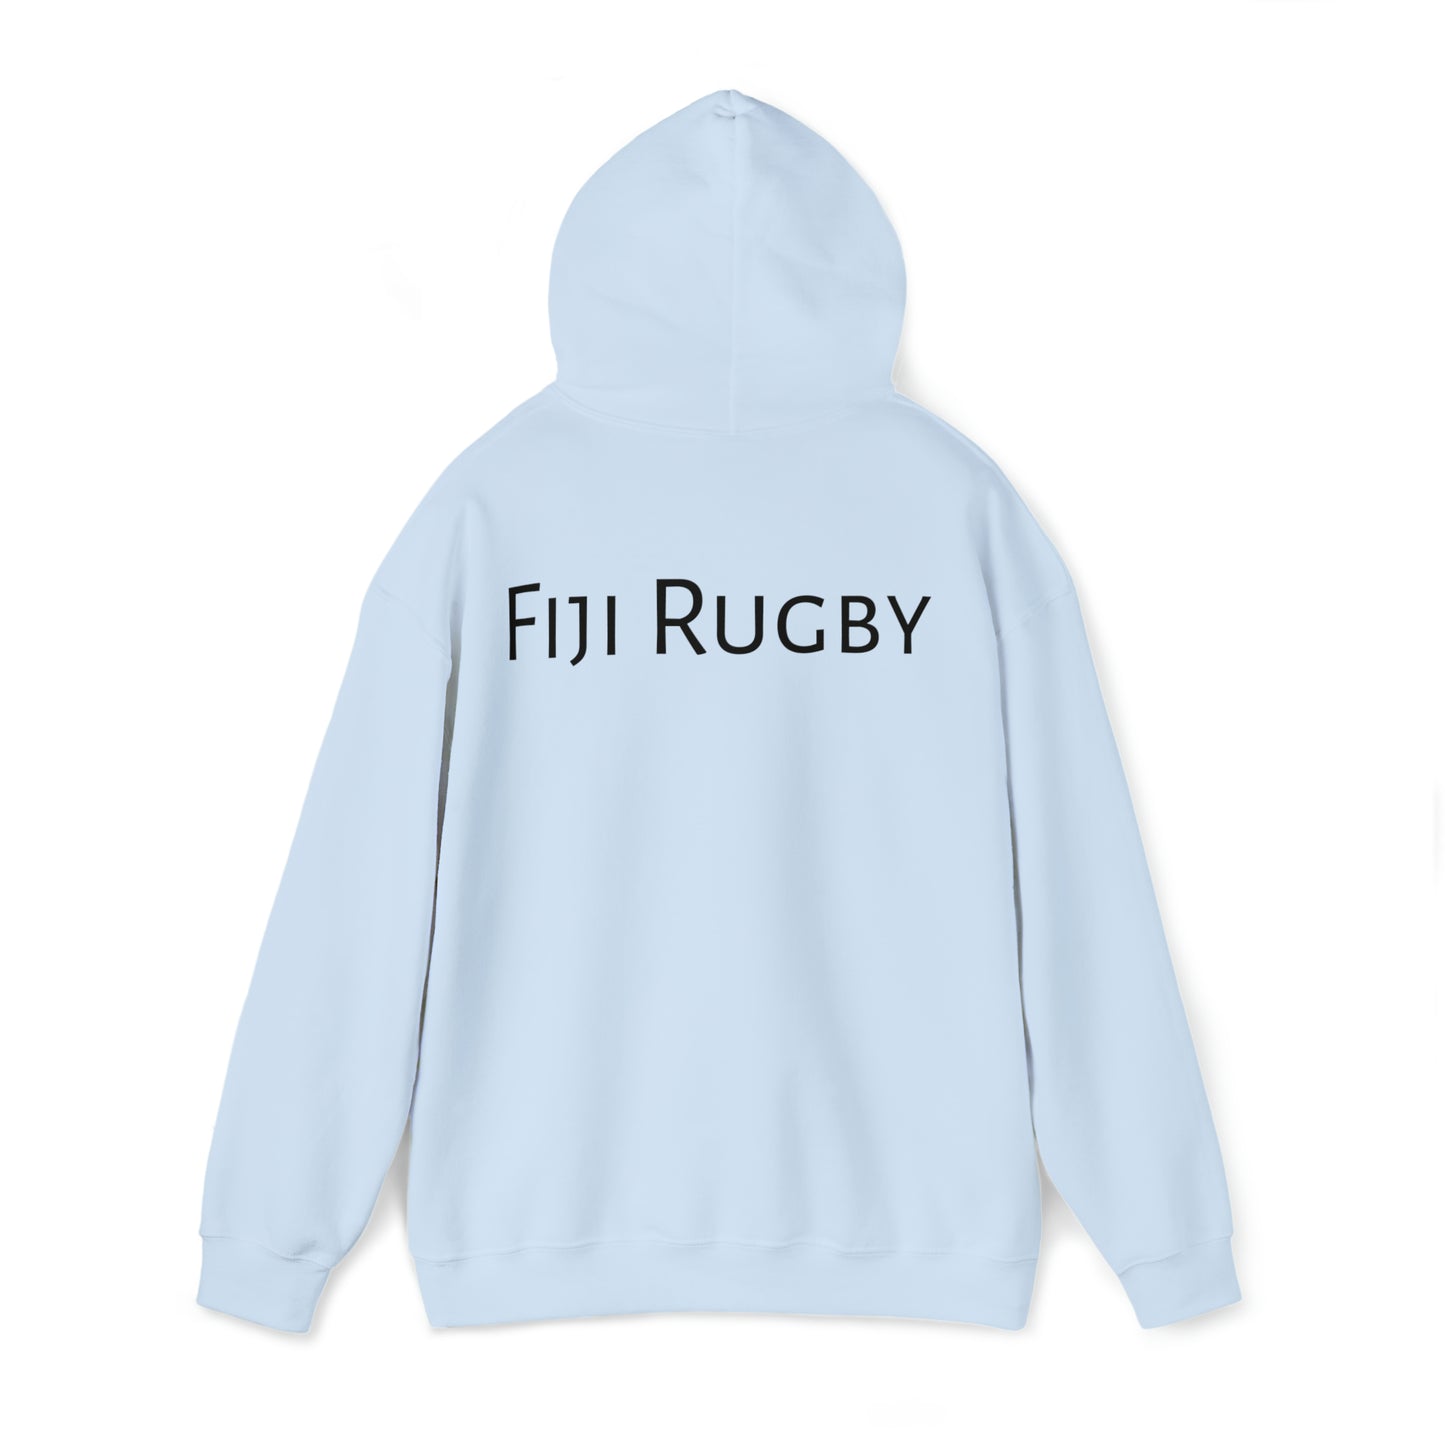 Celebrating Fiji - light hoodies